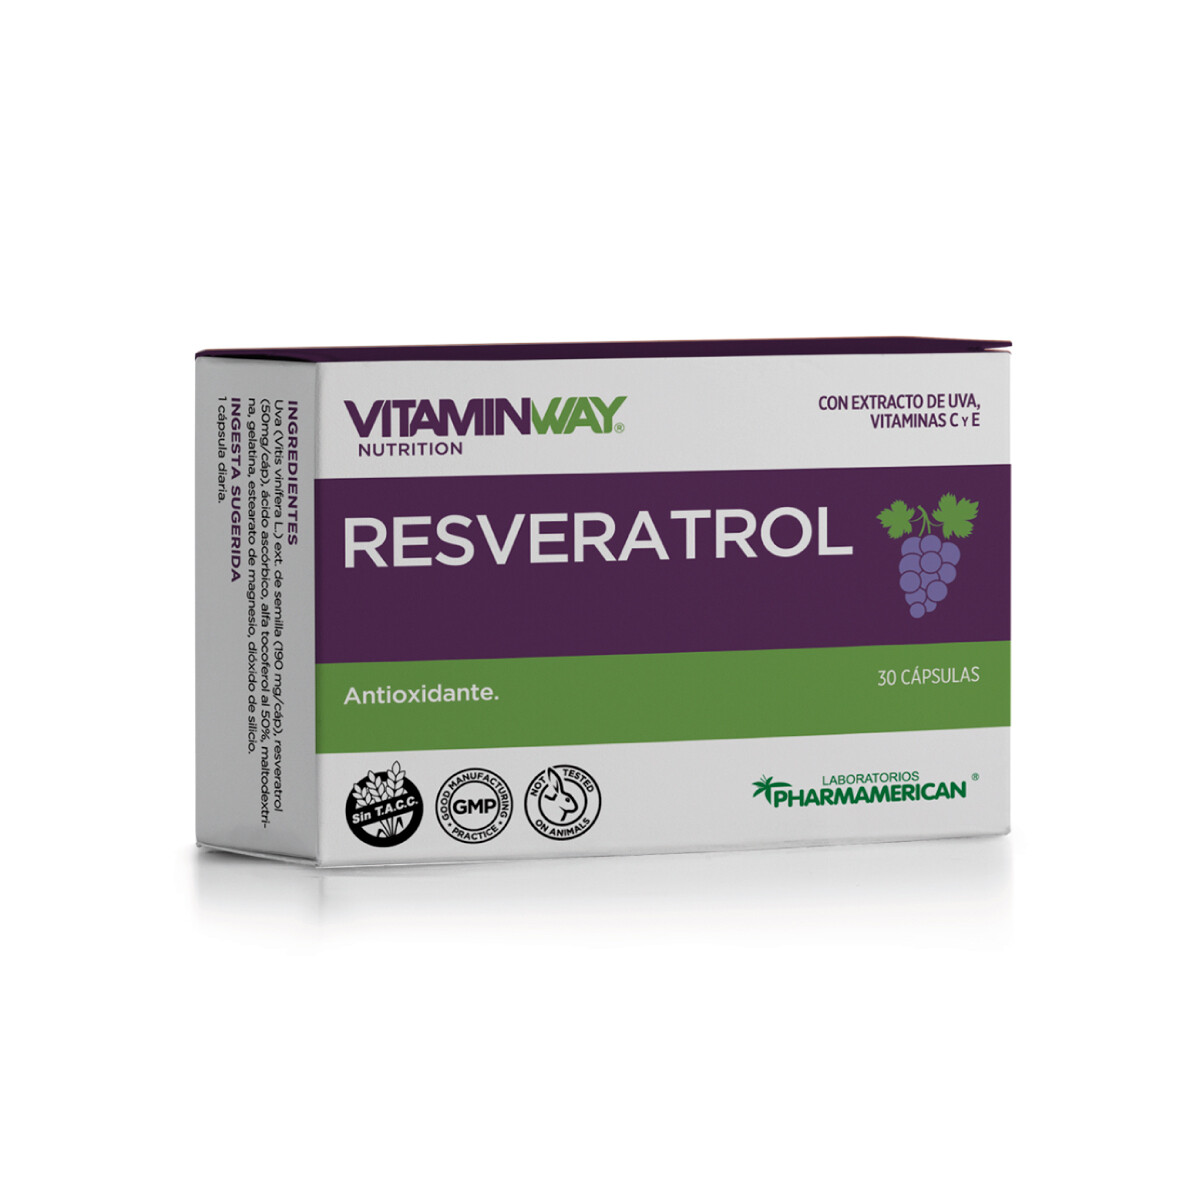 Vitaminway Resveratrol (Extracto de Uva) 30 caps 